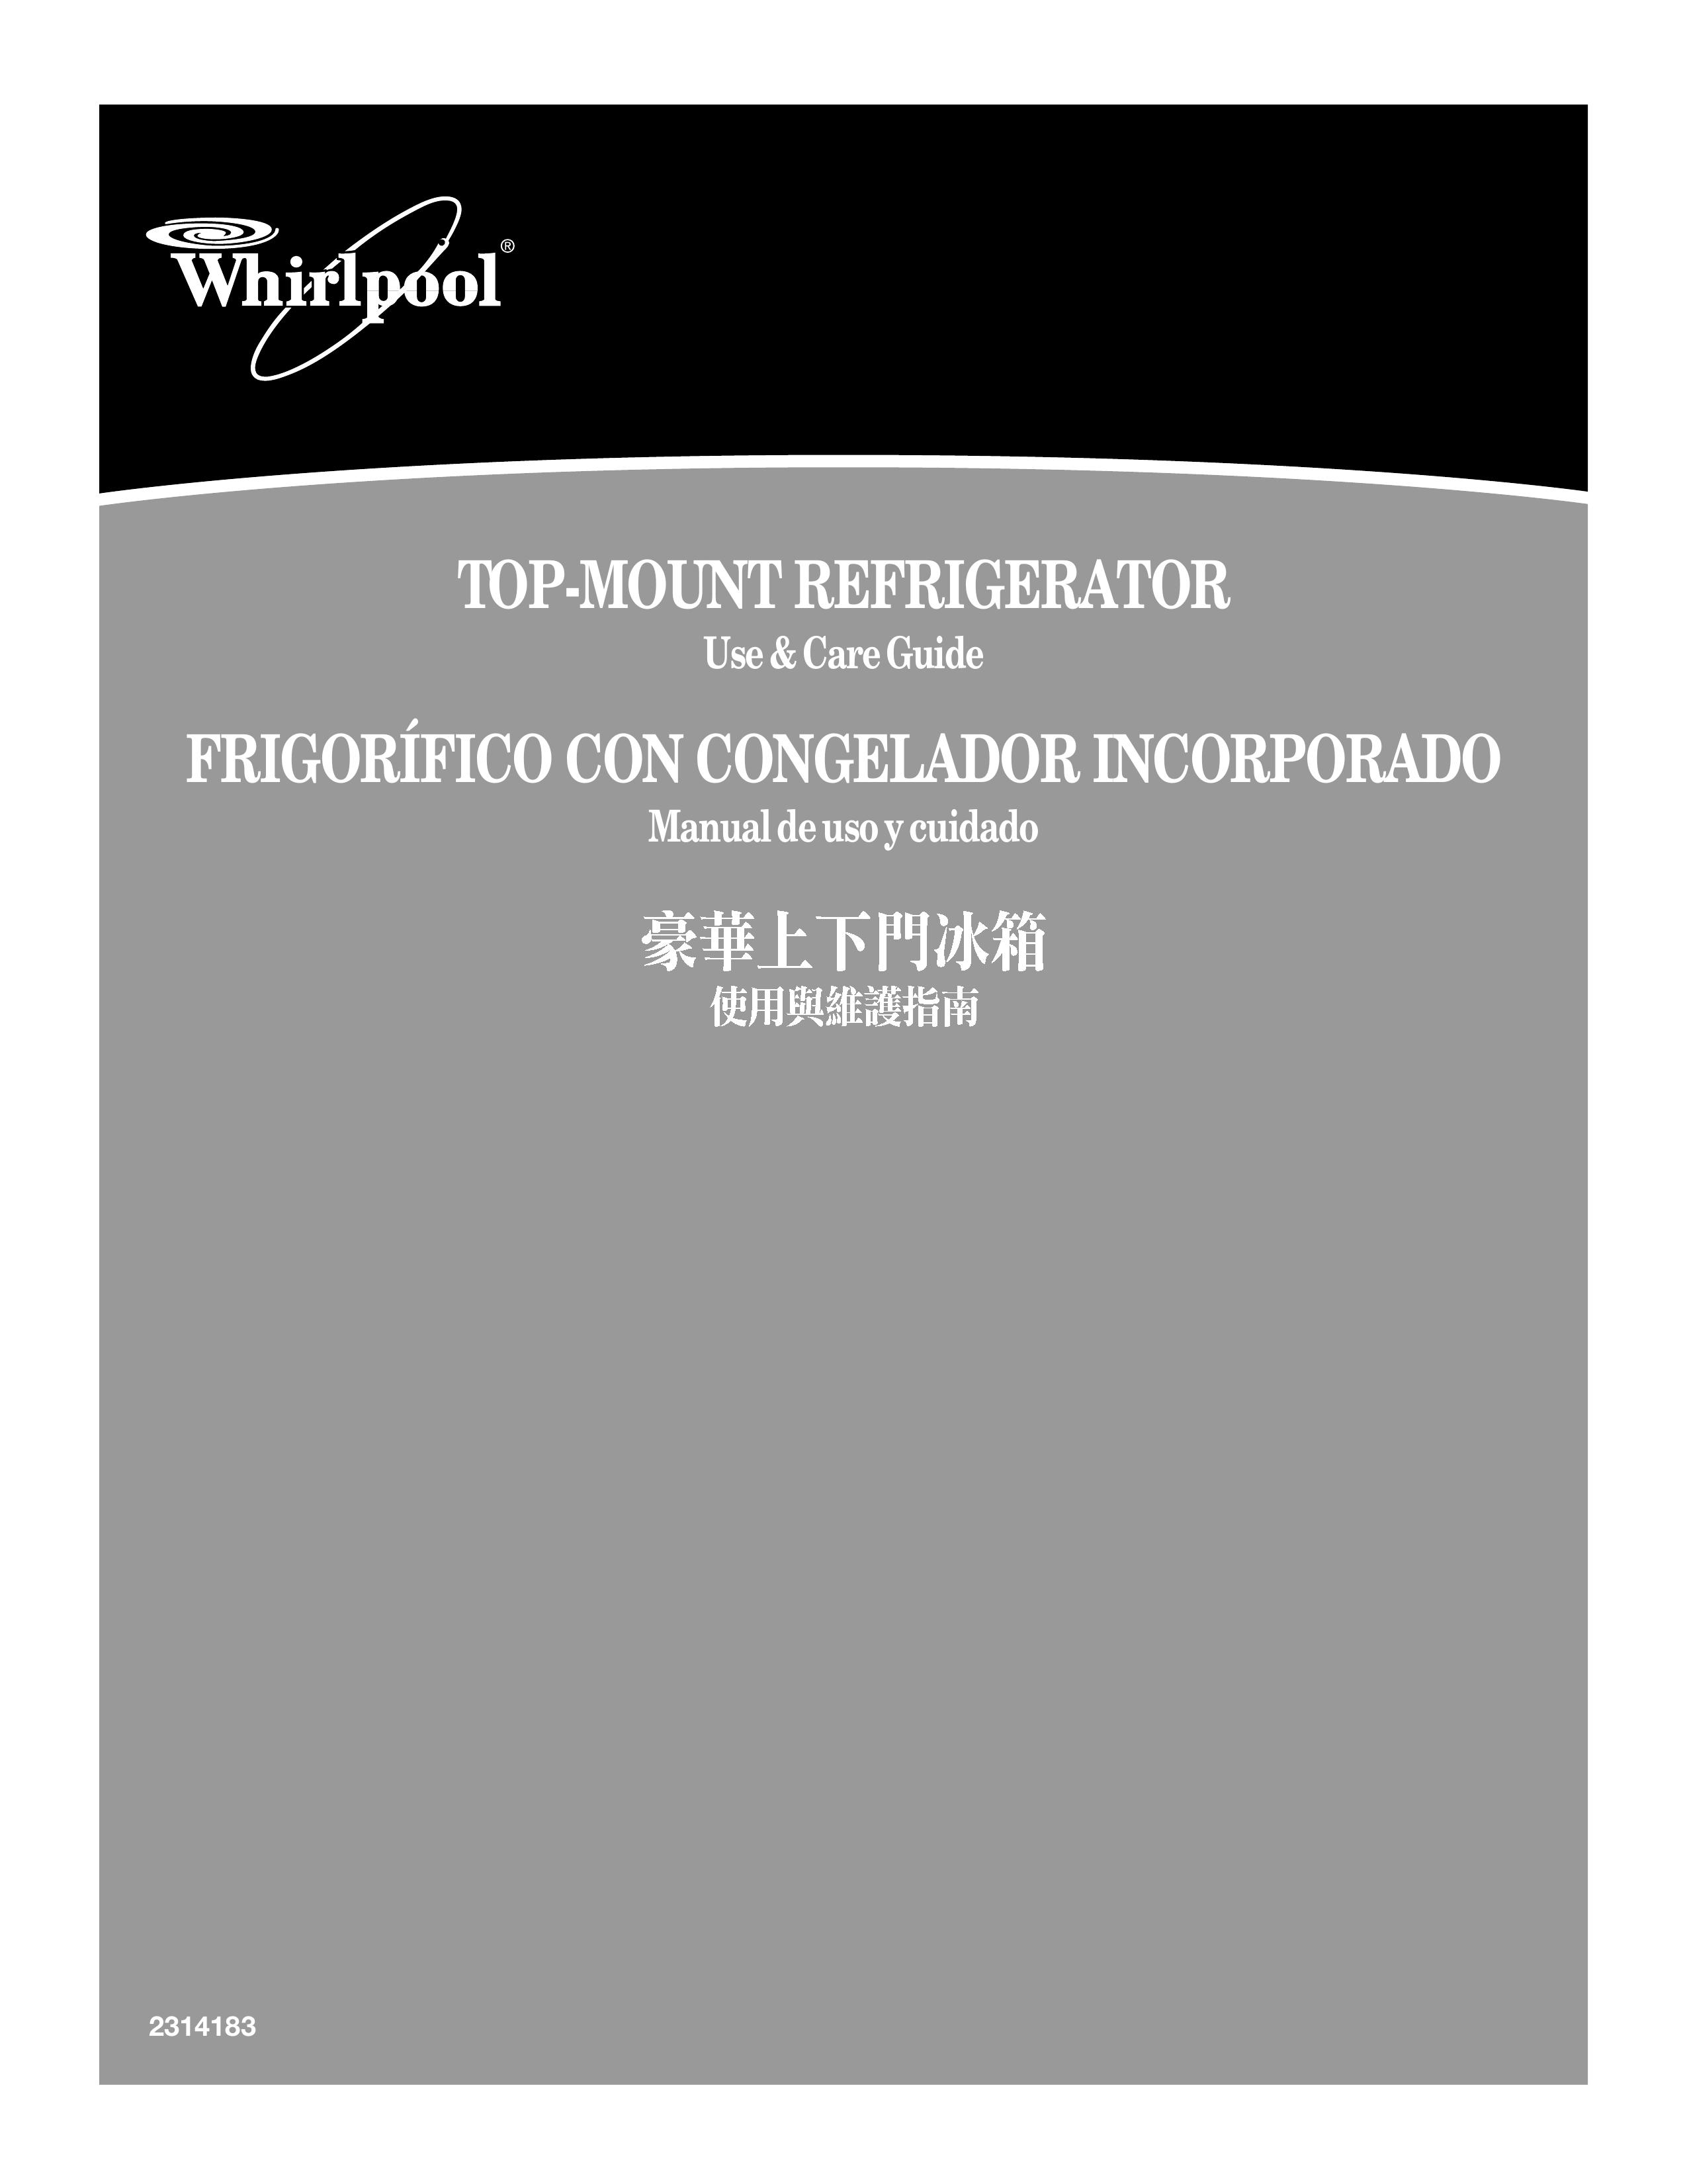 Whirlpool 2314183 Refrigerator User Manual